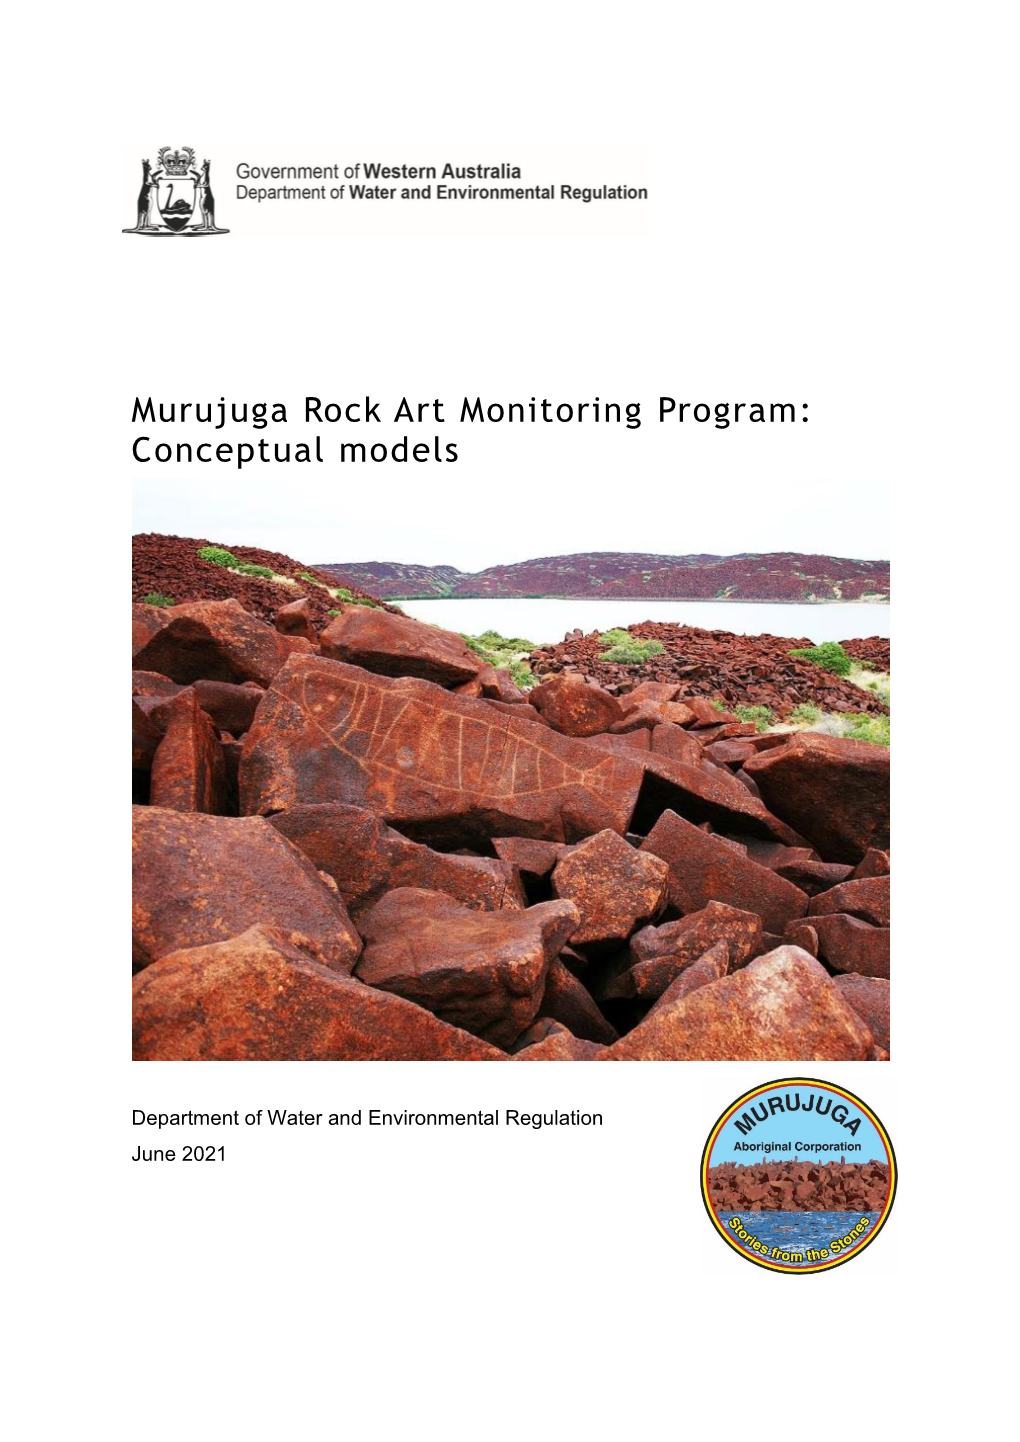 Murujuga Rock Art Monitoring Program: Conceptual Models